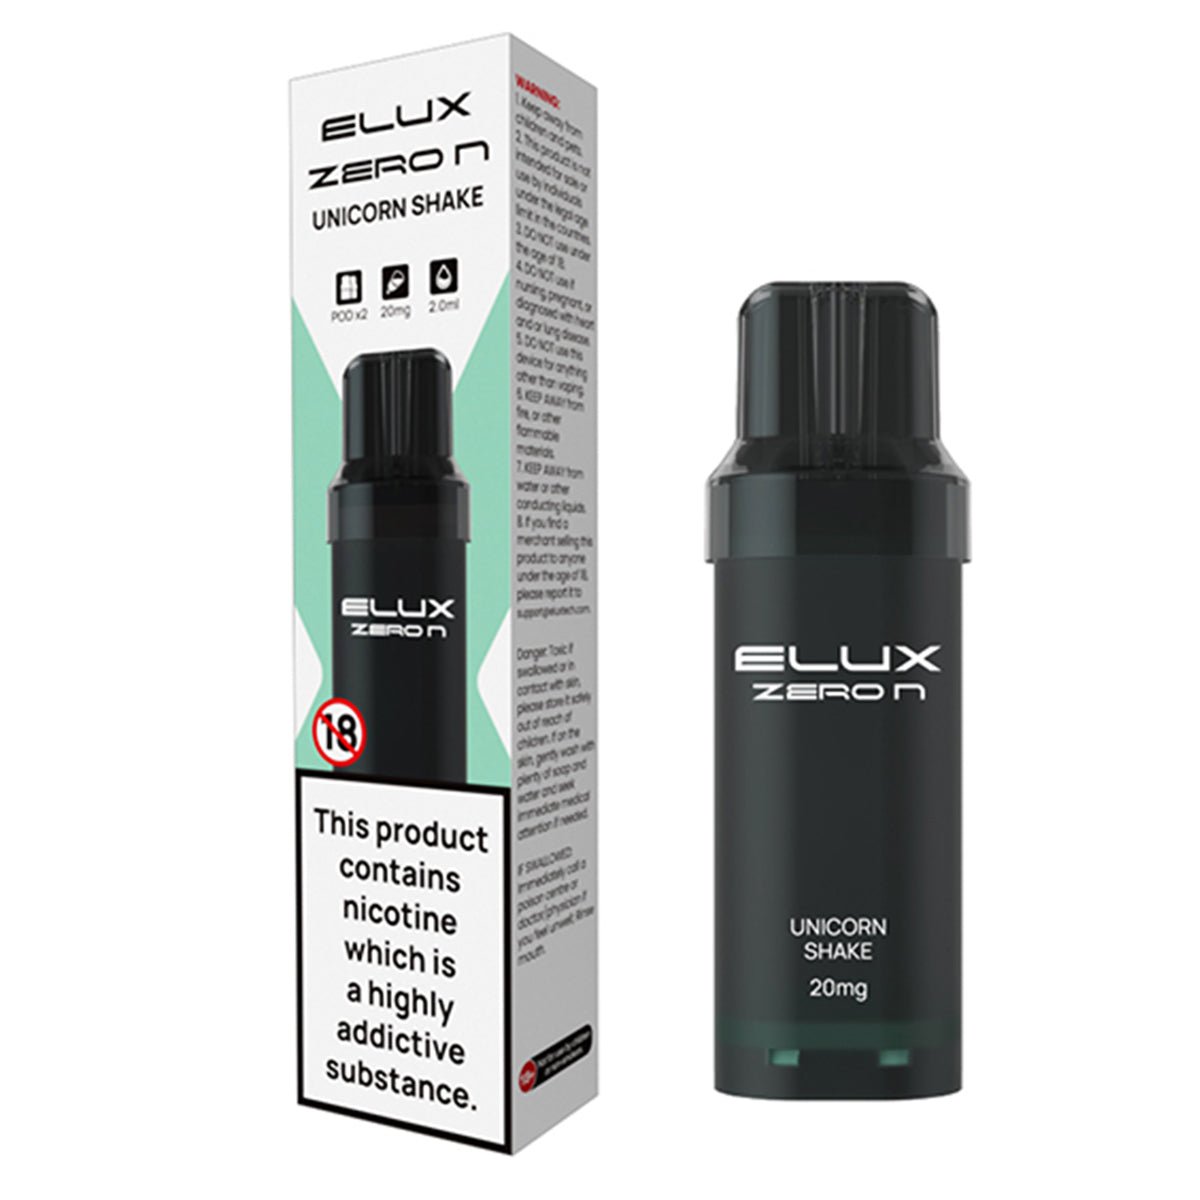 Unicorn Shake Zero N Pre-filled Pods By Elux - Manabush Eliquid - Tobacco E-liquid and Vape Juice